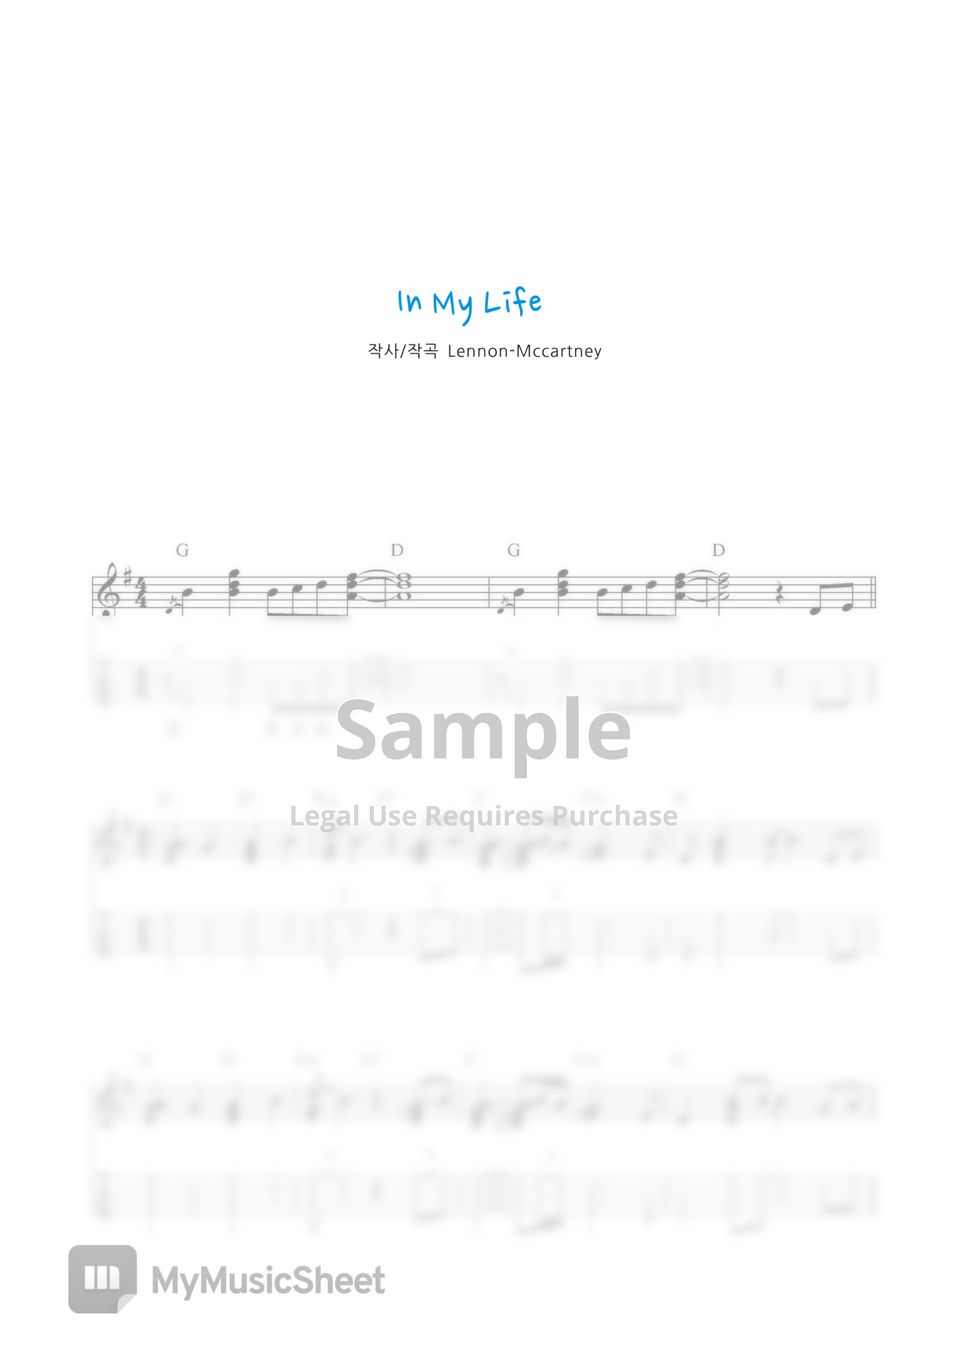 The Beatles - In My Life (연주곡) by 싱글벙글 우쿨렐레